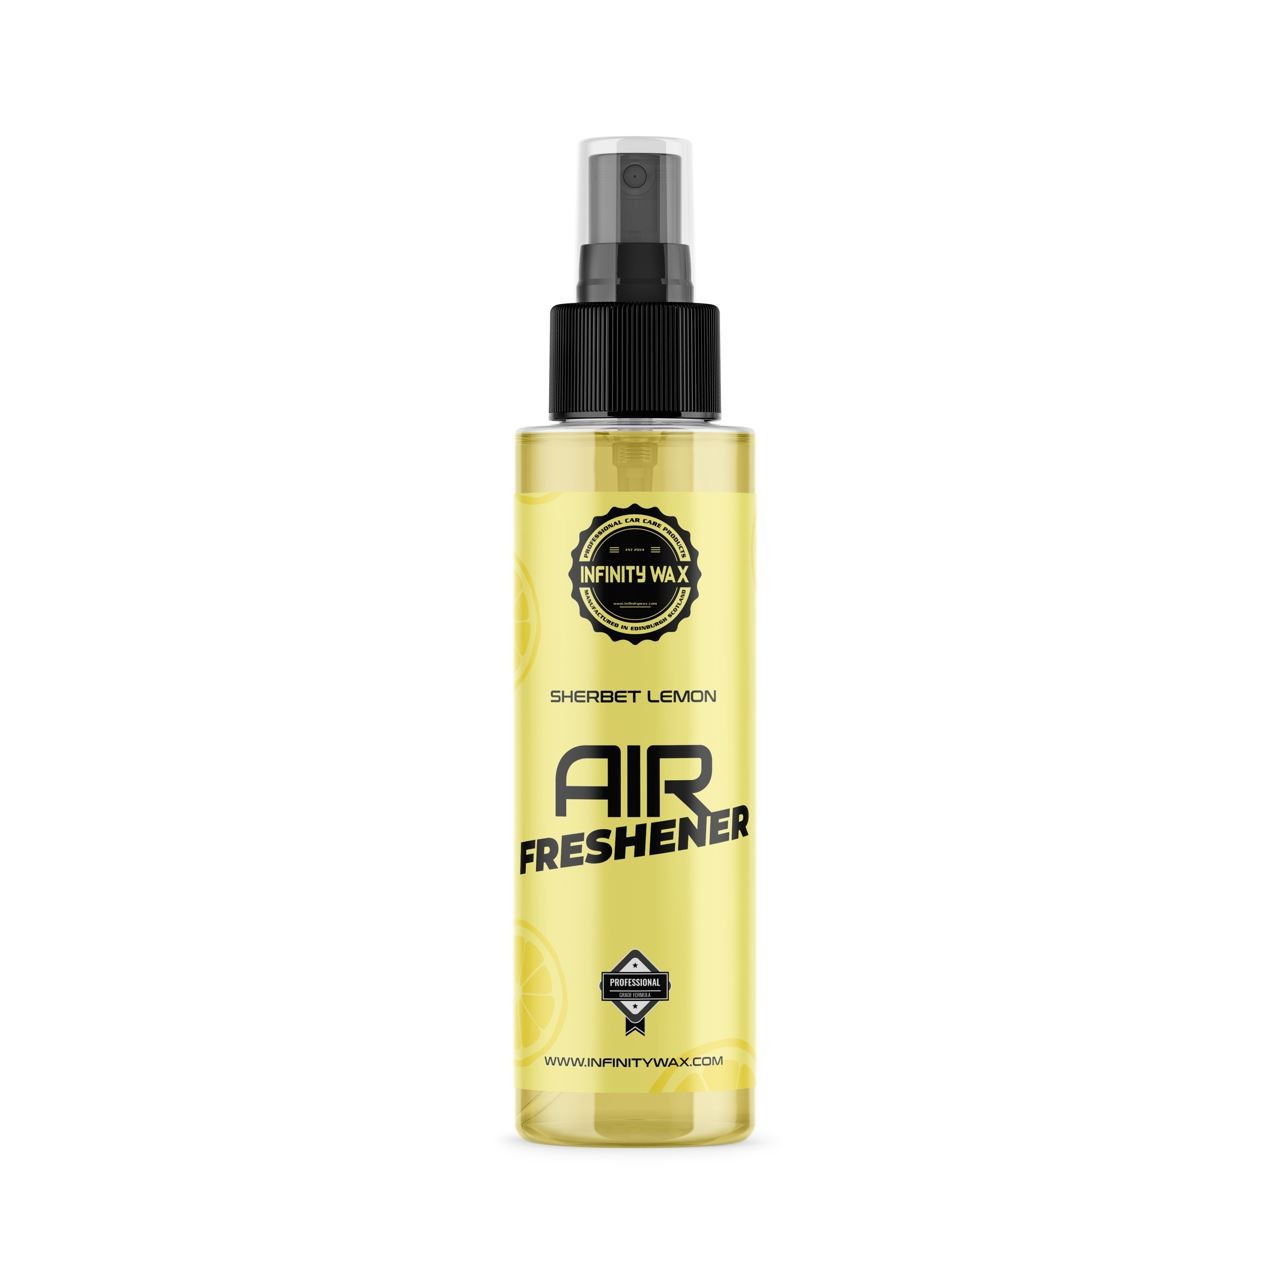 Osvěžovač vzduchu Infinity Wax Air Freshener Sherbet Lemon (250 ml)